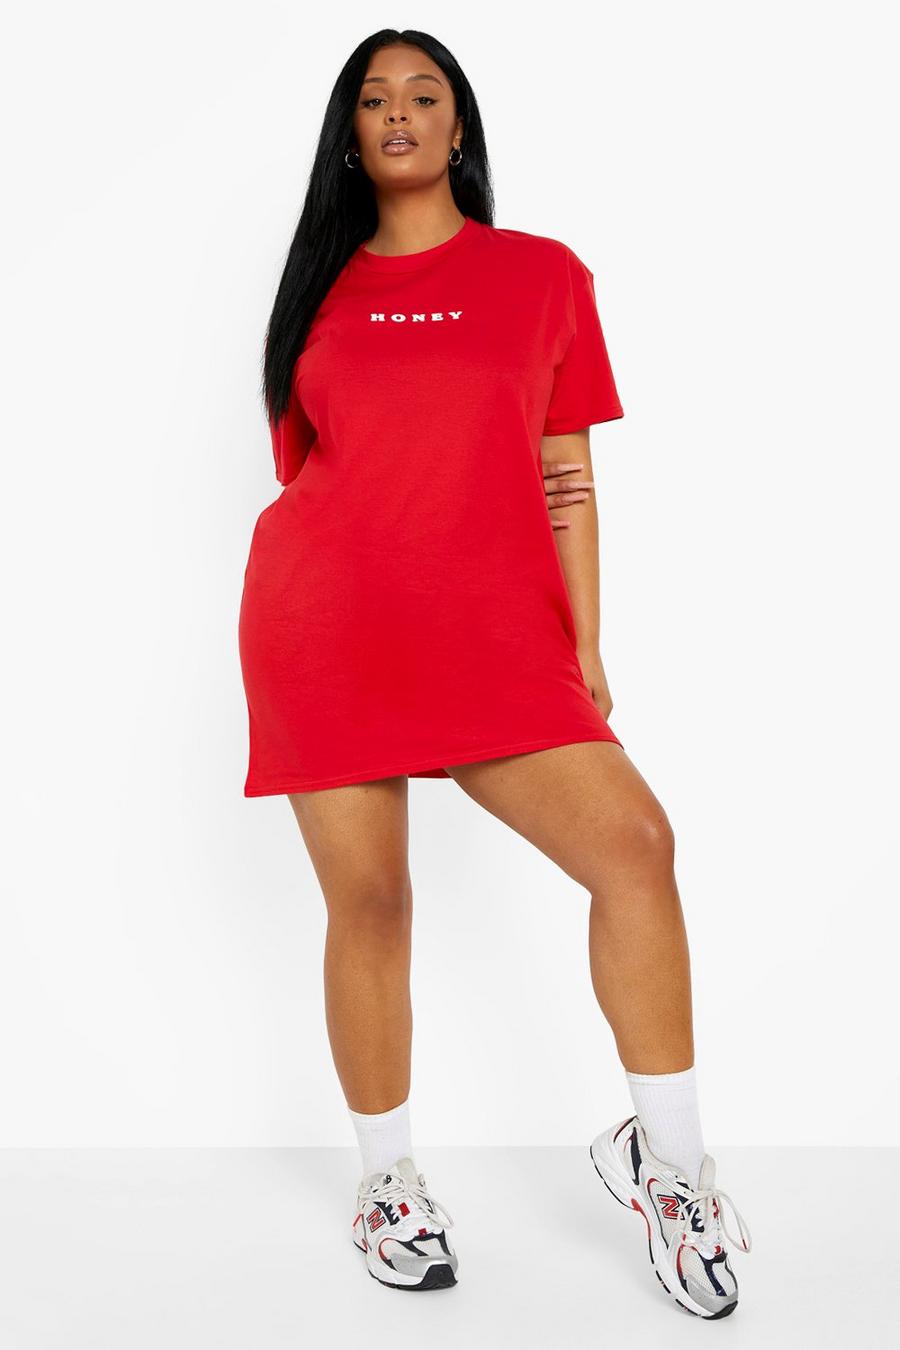 https://media.boohoo.com/i/boohoo/pzz62687_red_xl/female-red-plus-honey-oversized-t-shirt-dress/?w=900&qlt=default&fmt.jp2.qlt=70&fmt=auto&sm=fit